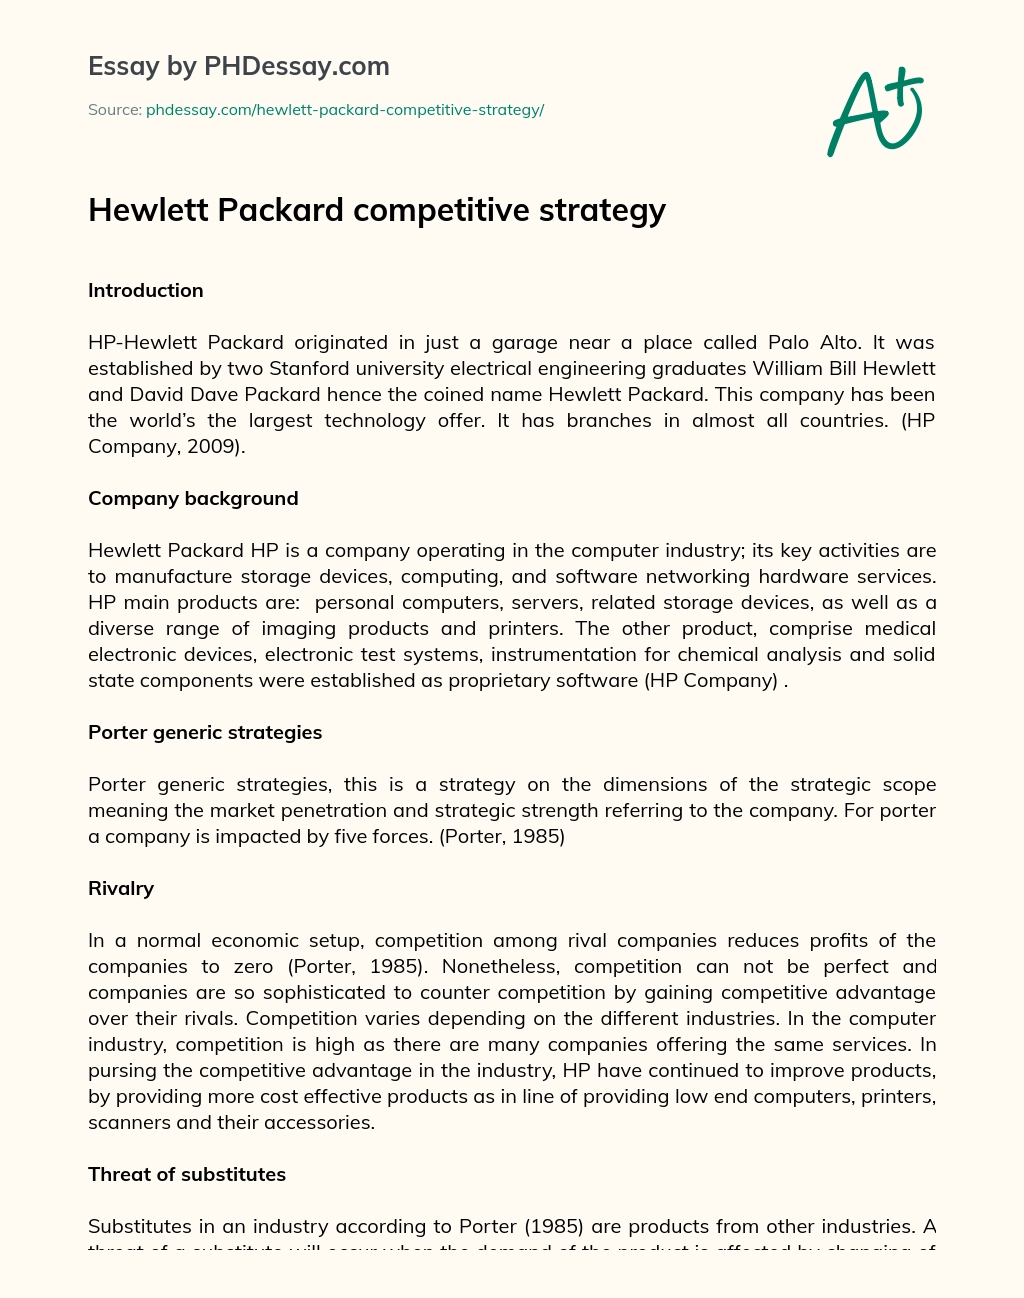 Hewlett Packard competitive strategy essay